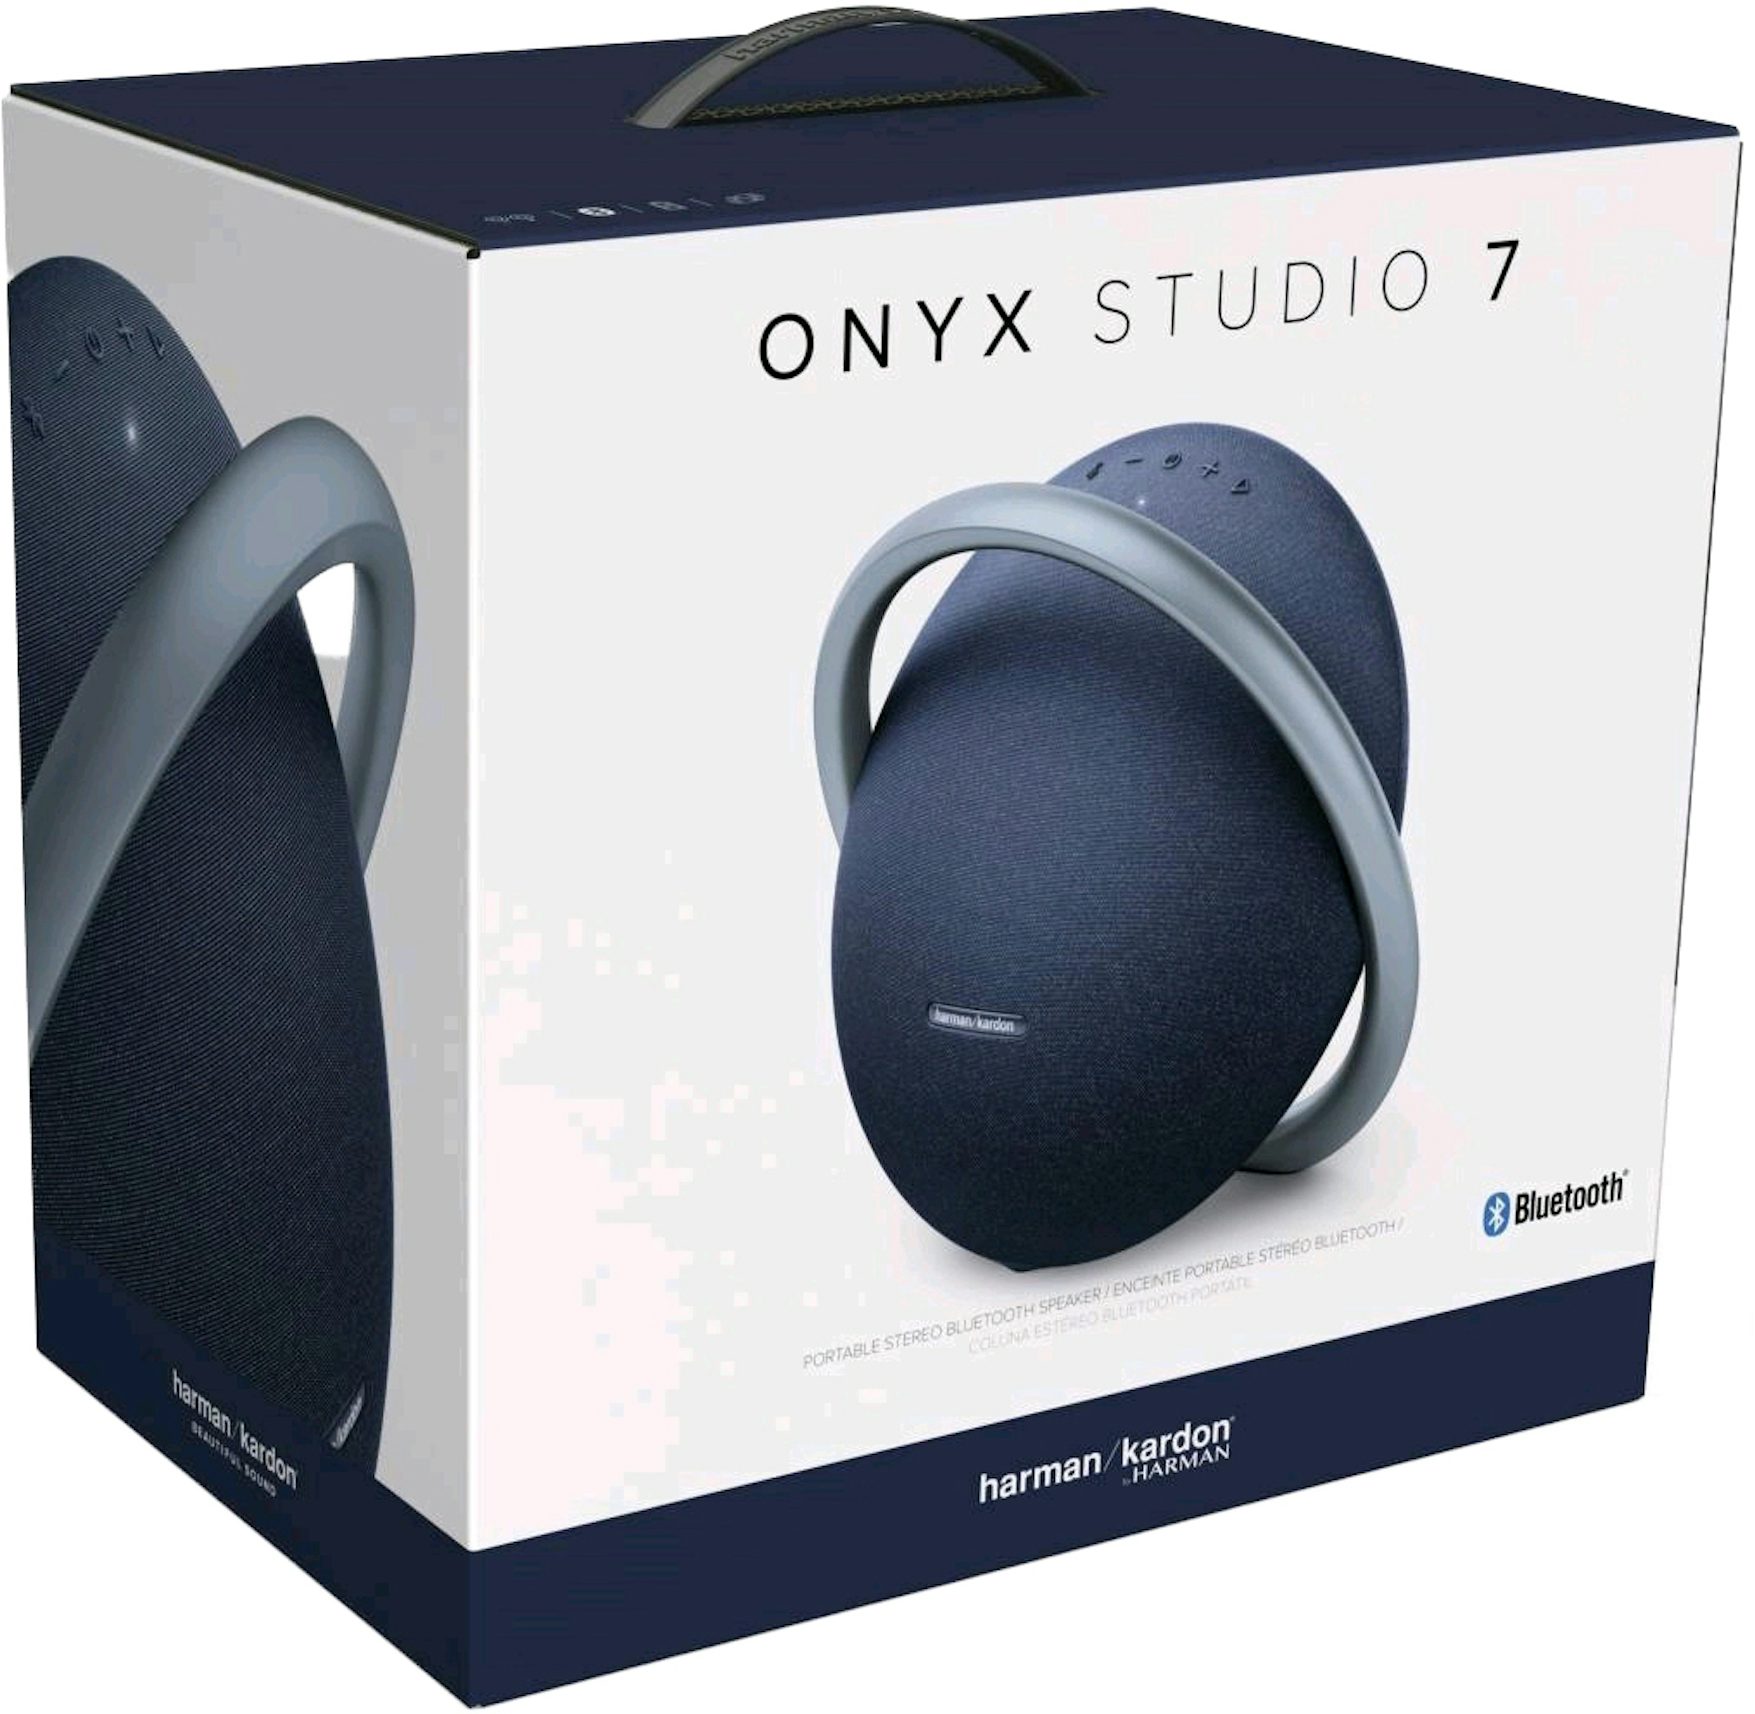 7 - Portable Onyx Bluetooth HKOS7BLUAM US Speaker Studio Blue Kardon Stereo Harman